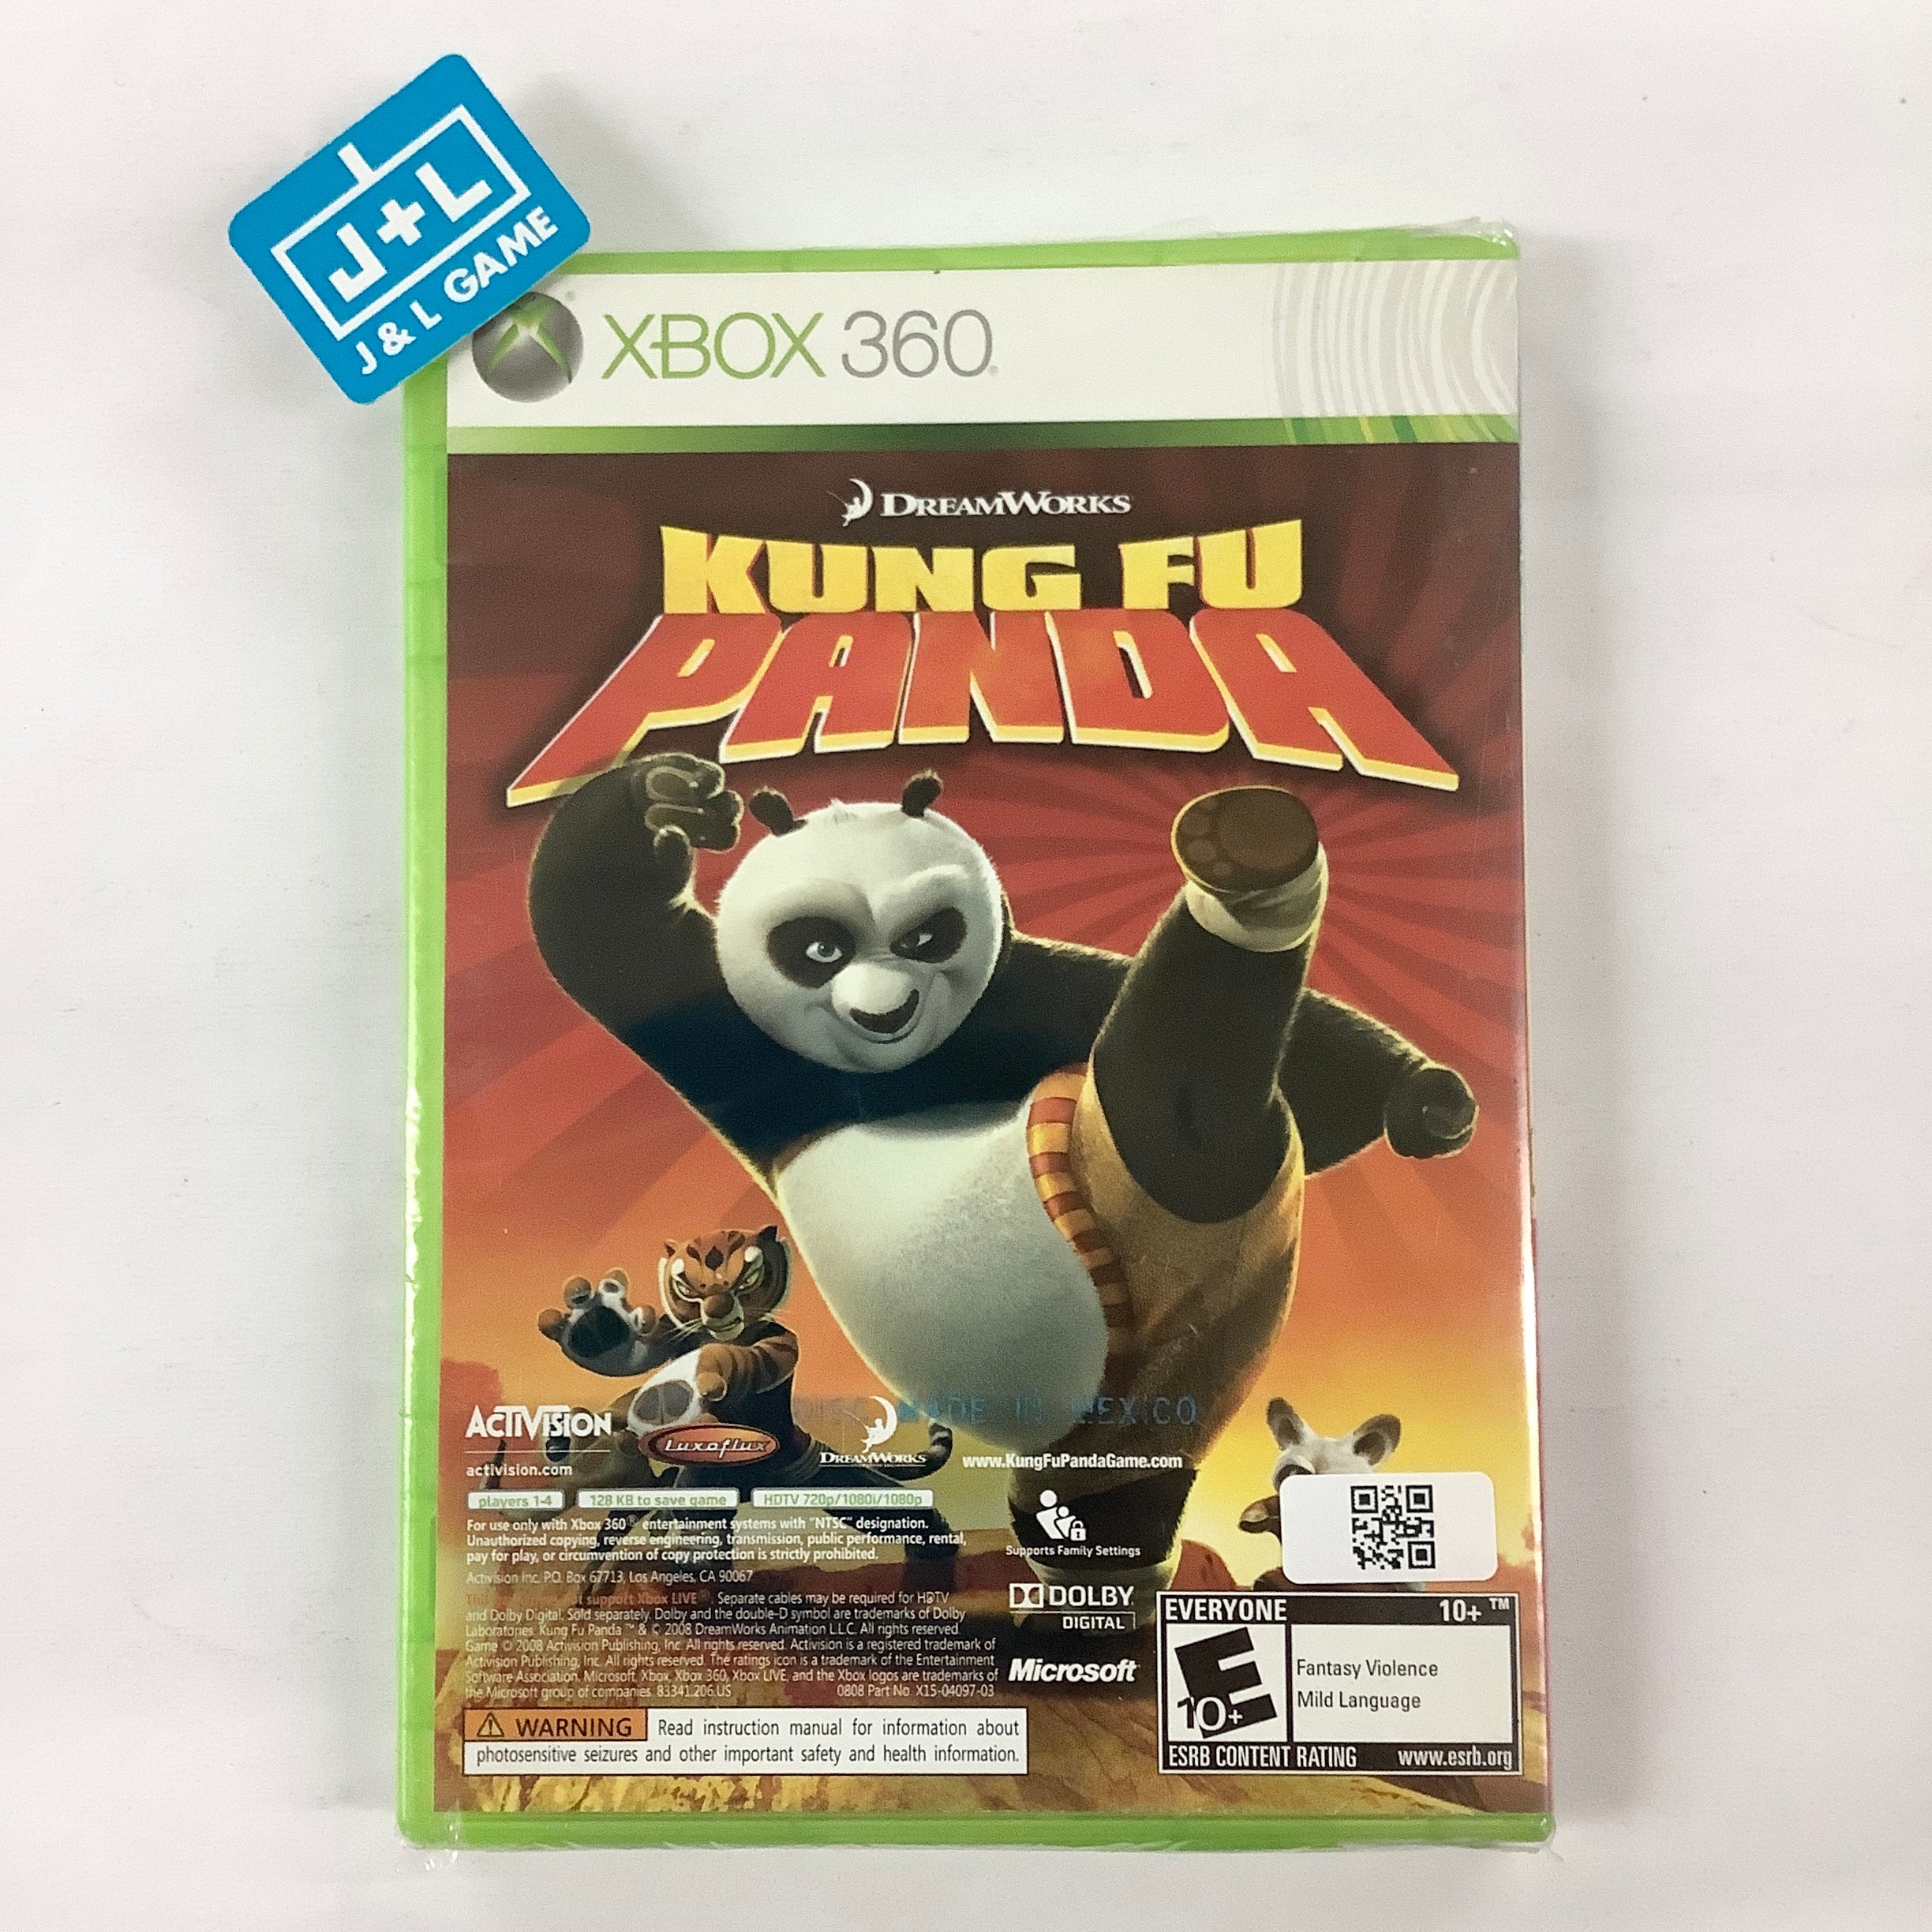 LEGO Indiana Jones: The Original Adventures / DreamWorks Kung Fu Panda - Xbox 360 Video Games Microsoft Game Studios   